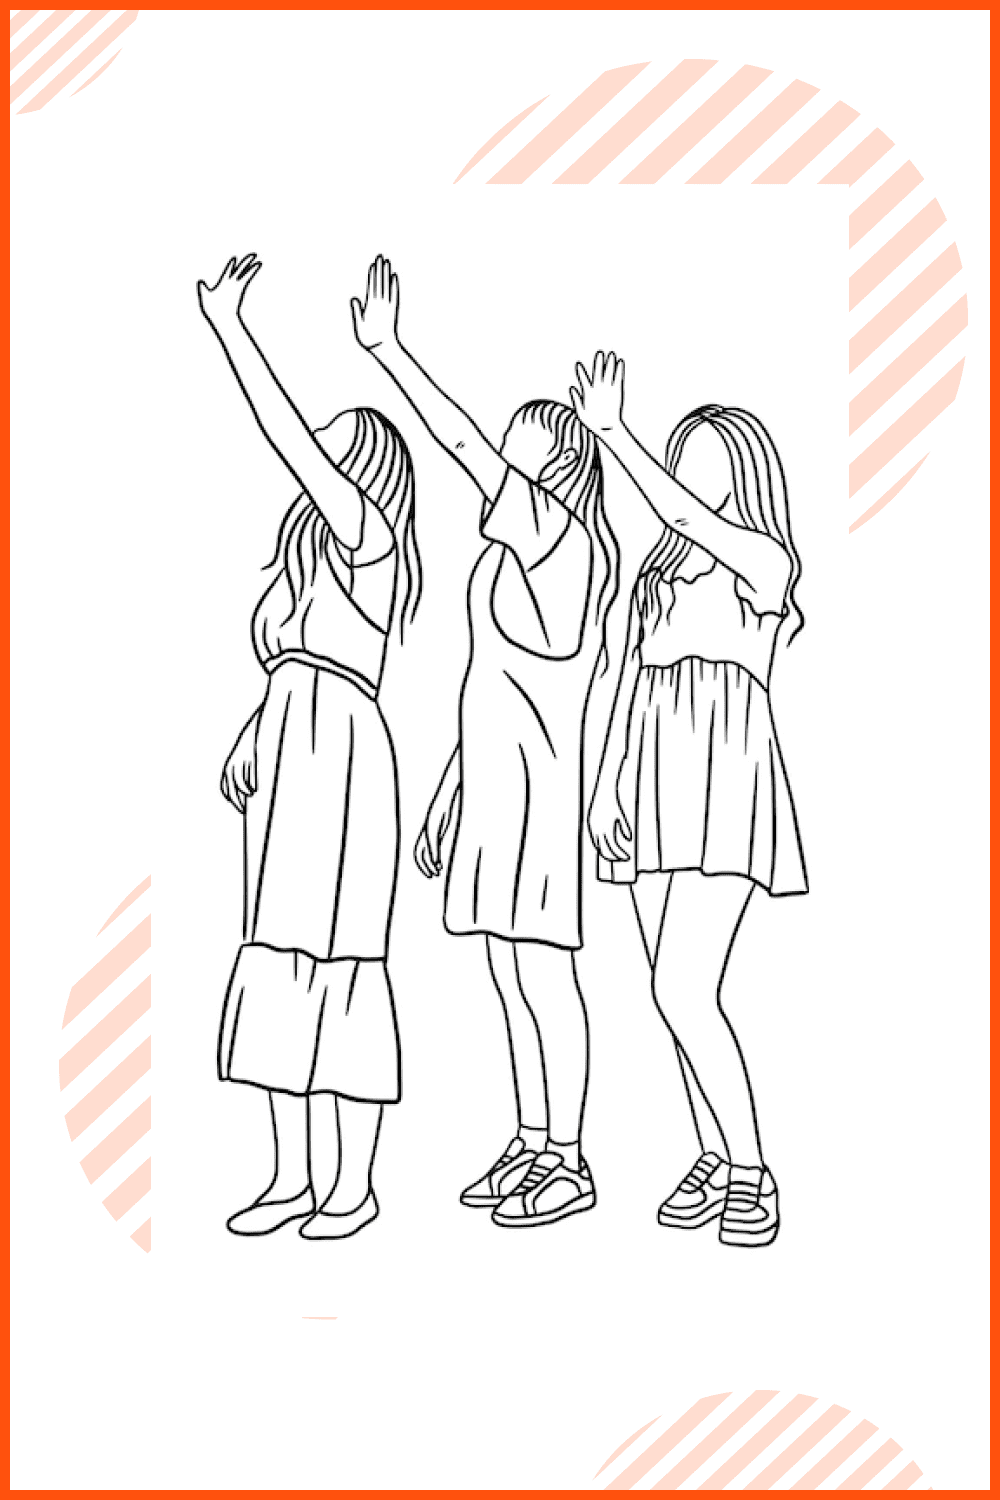 Sketch of three standing girls.